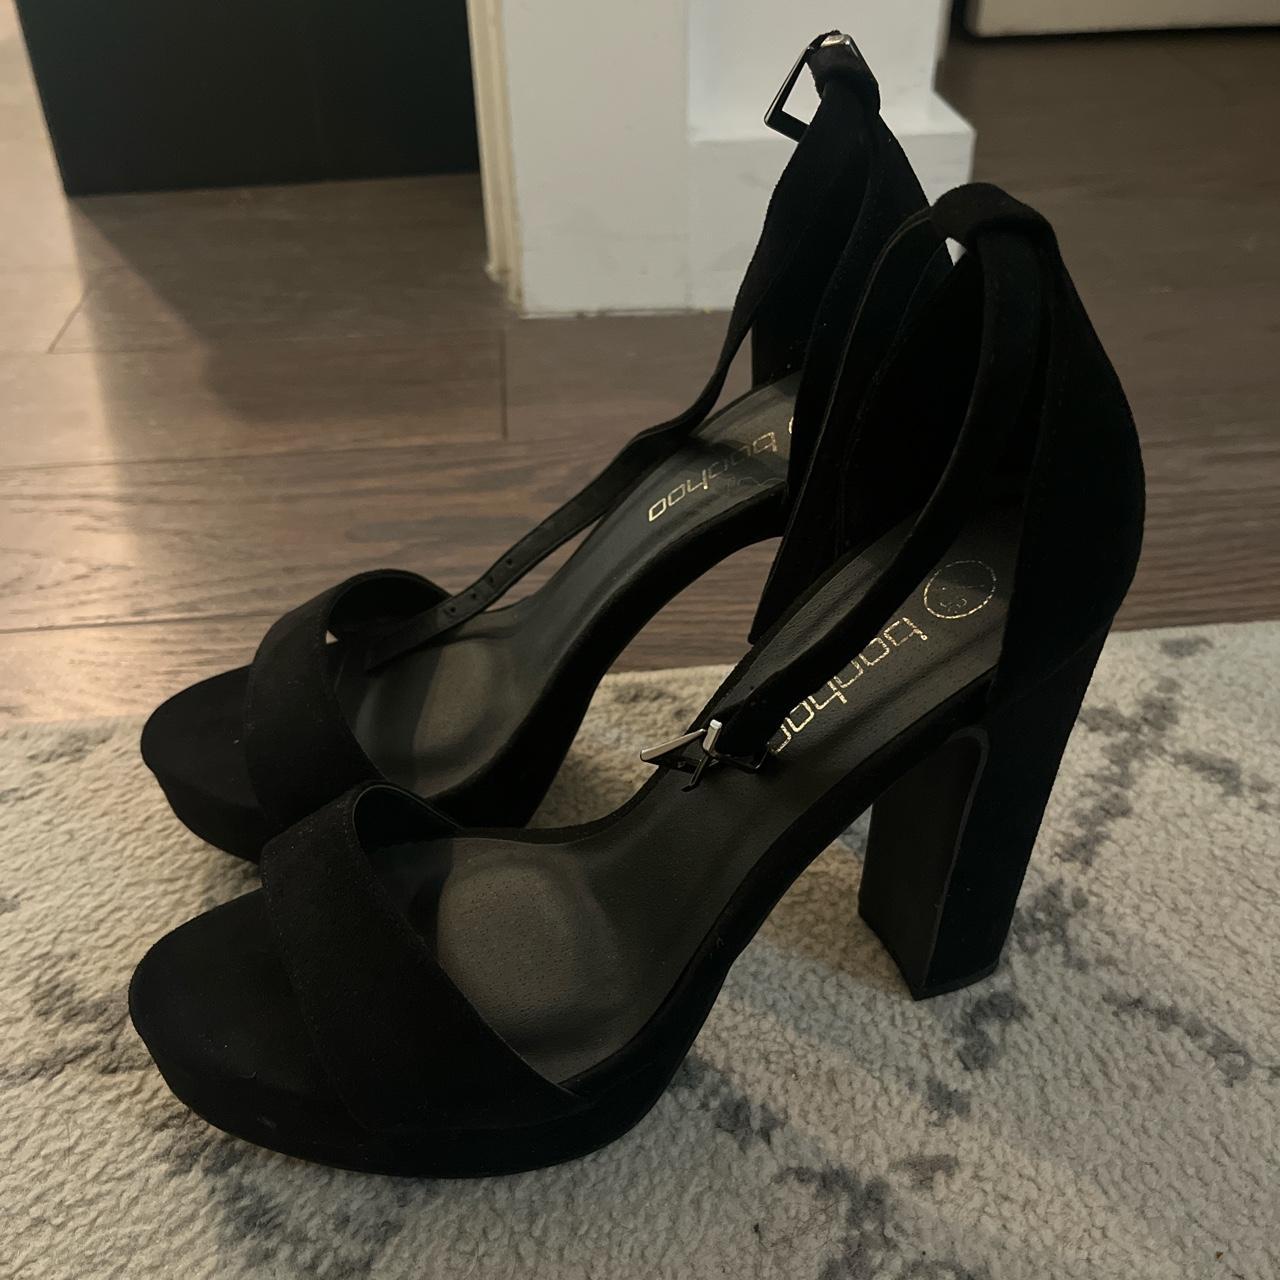 Lightly worn black ~4 inch heels - Depop